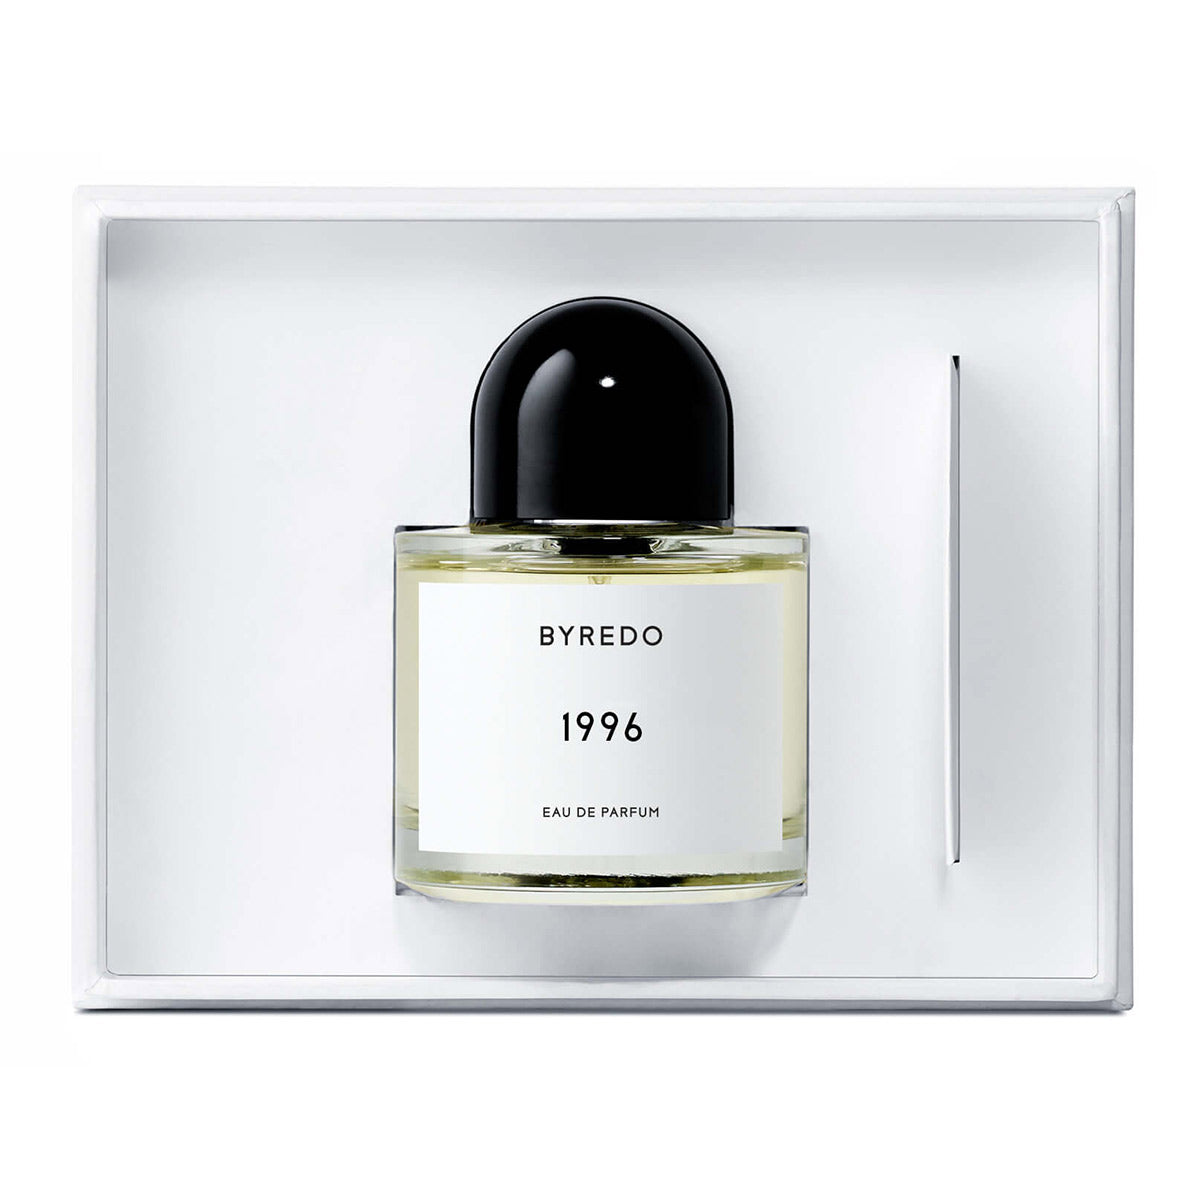 Alternate image of 1996 Eau de Parfum